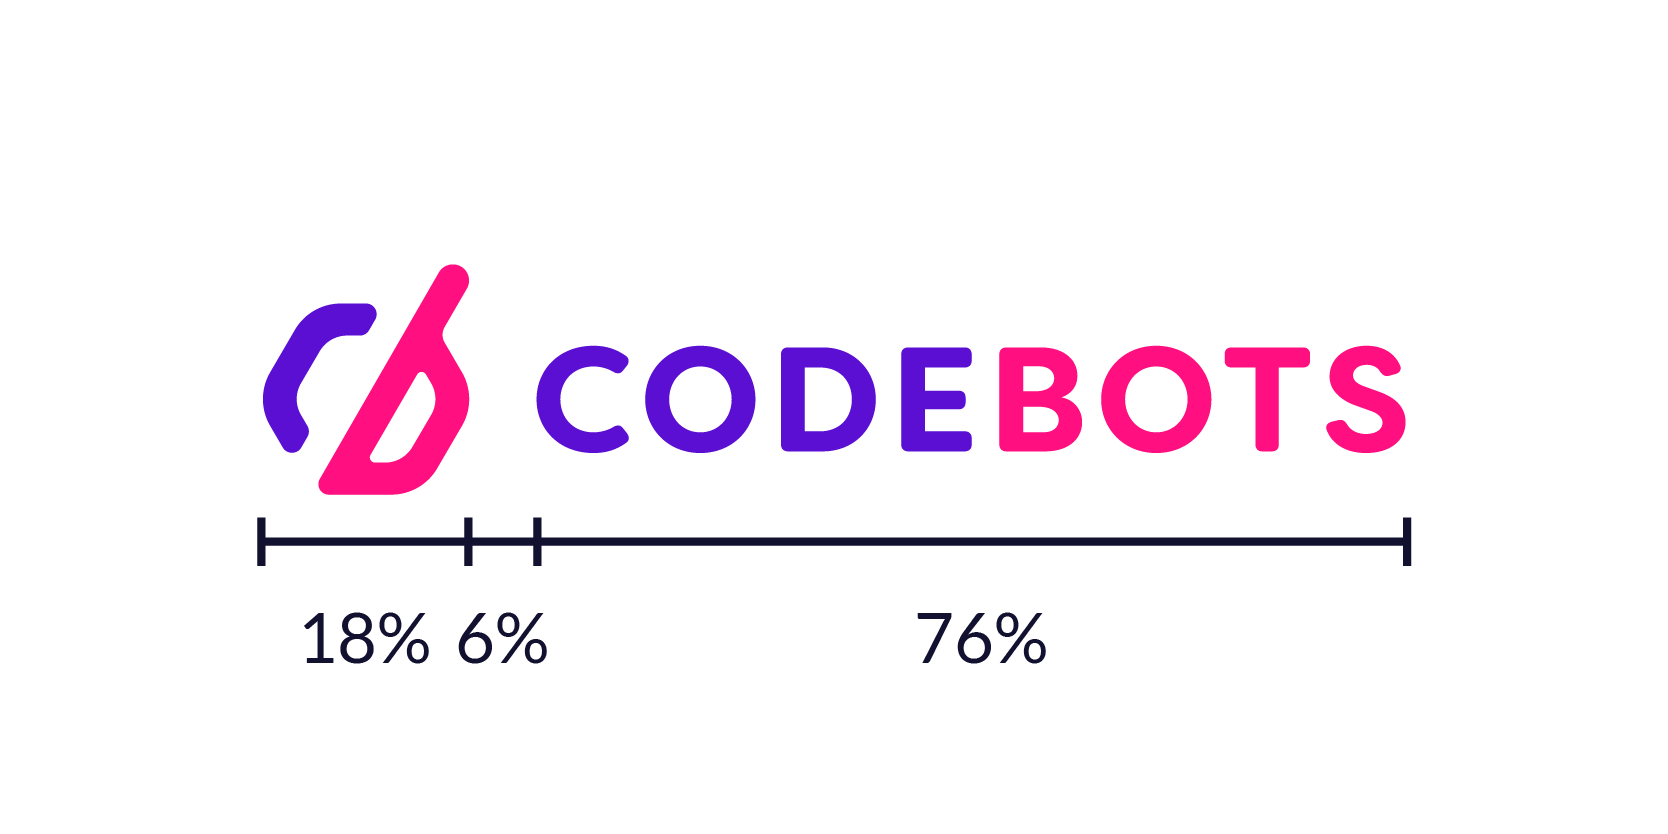 Codebots ratio inline logo